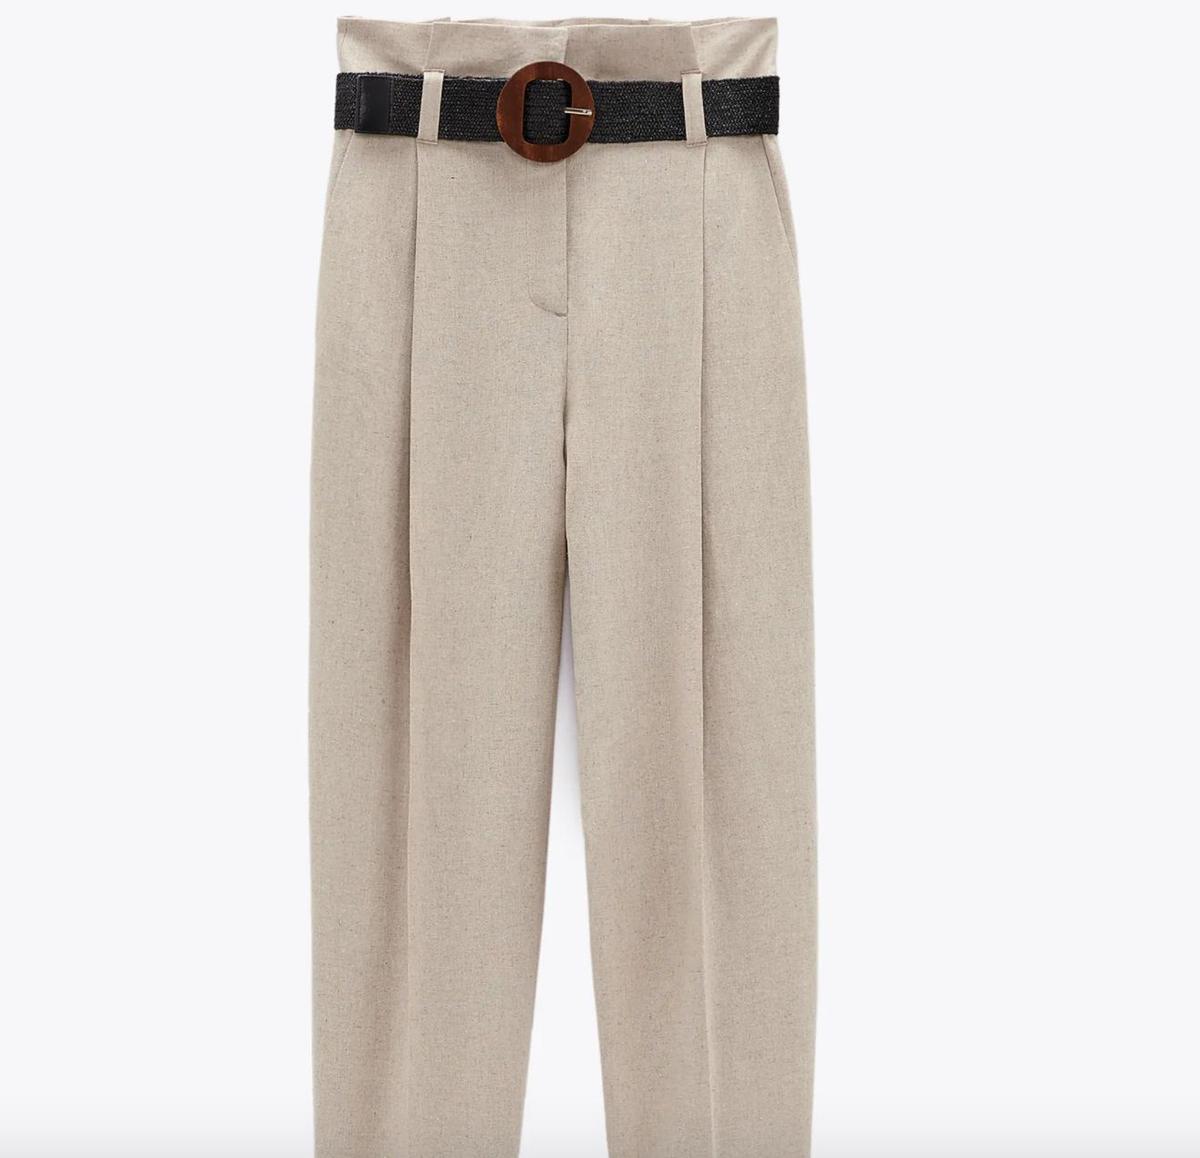 Pantalón de pinzas estilo rústico, de Zara